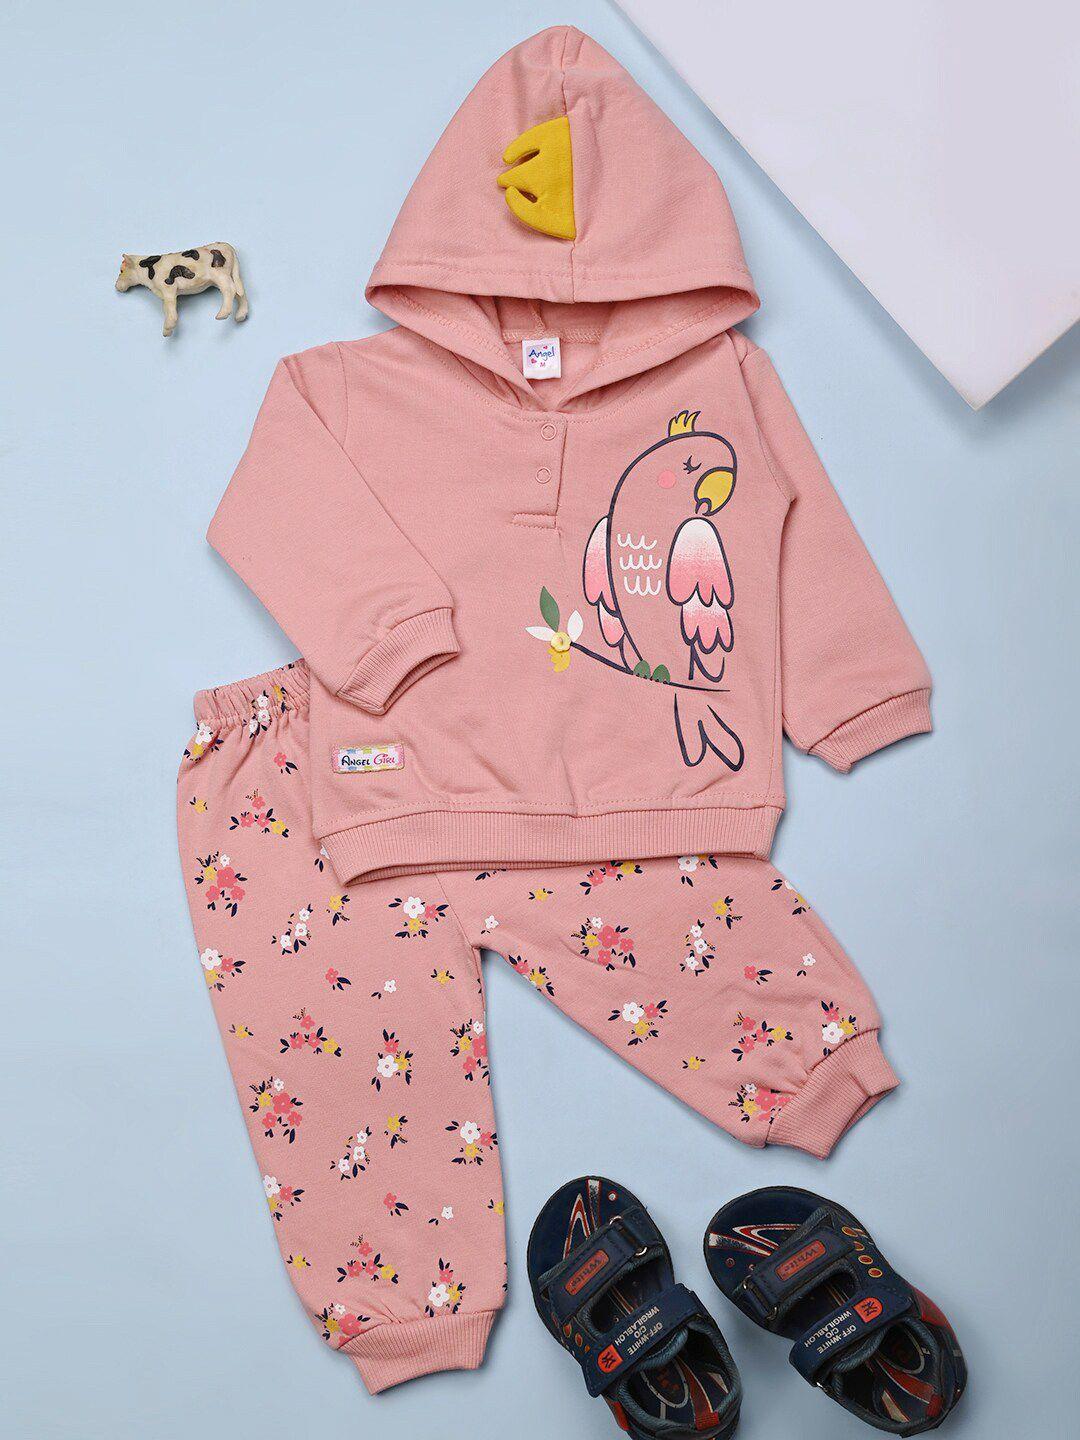 v-mart-infants-printed-hooded-pure-cotton-clothing-set